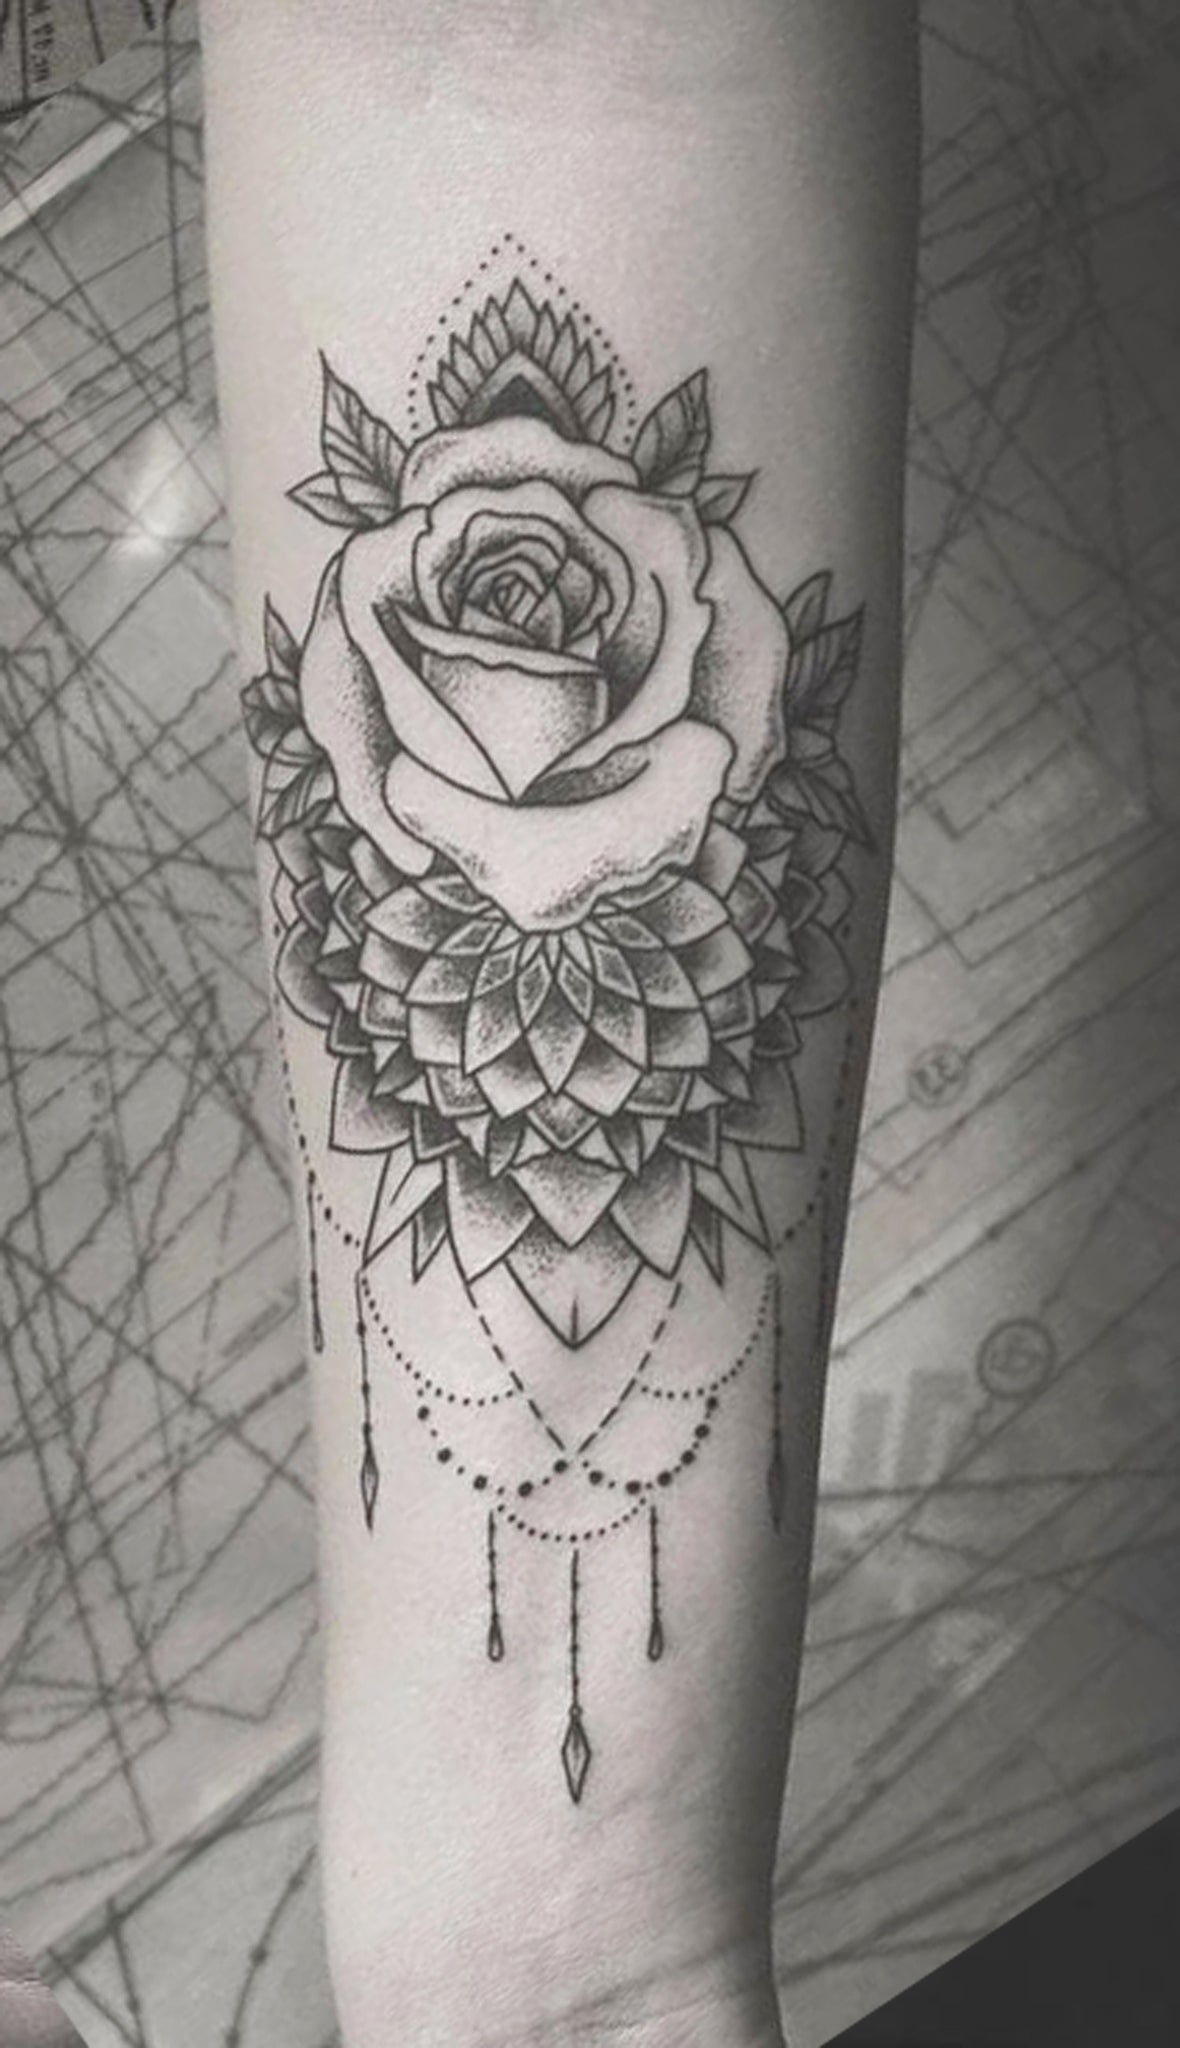 Boho Black Rose Chandelier Forearm Tattoo Ideas for Women - Mandala Lotus Flower Arm Sleeve Tat -  ideas de tatuaje de antebrazo rosa - www.MyBodiArt.com